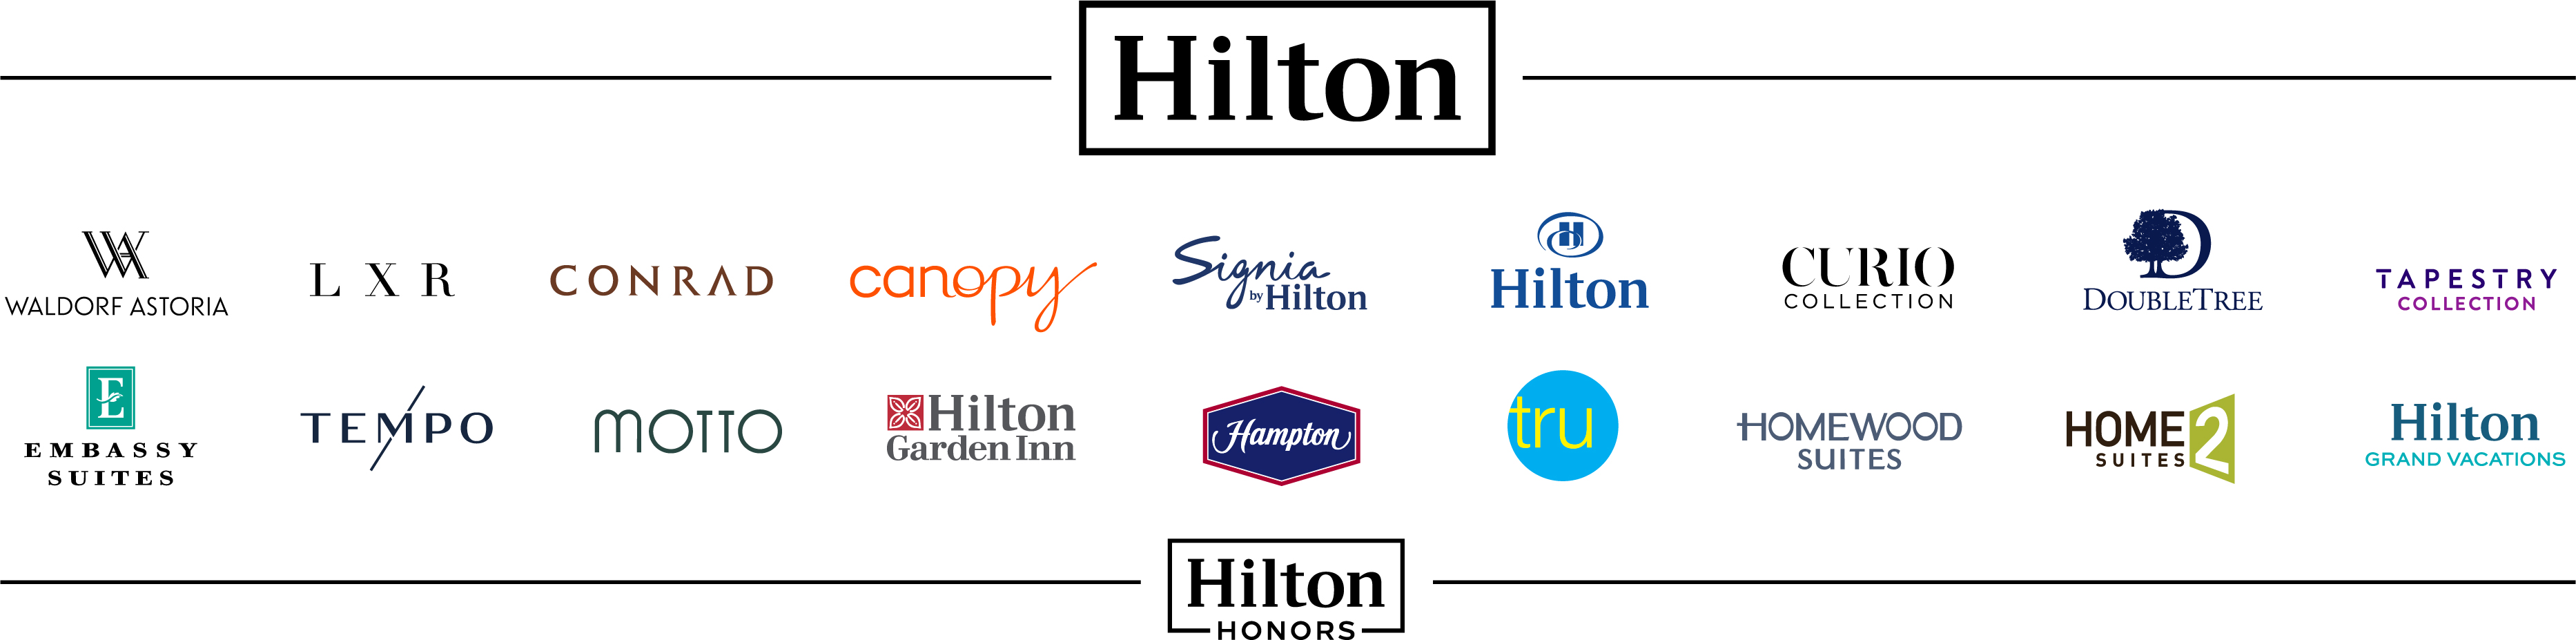 Hilton Food and Beverage Portfolio